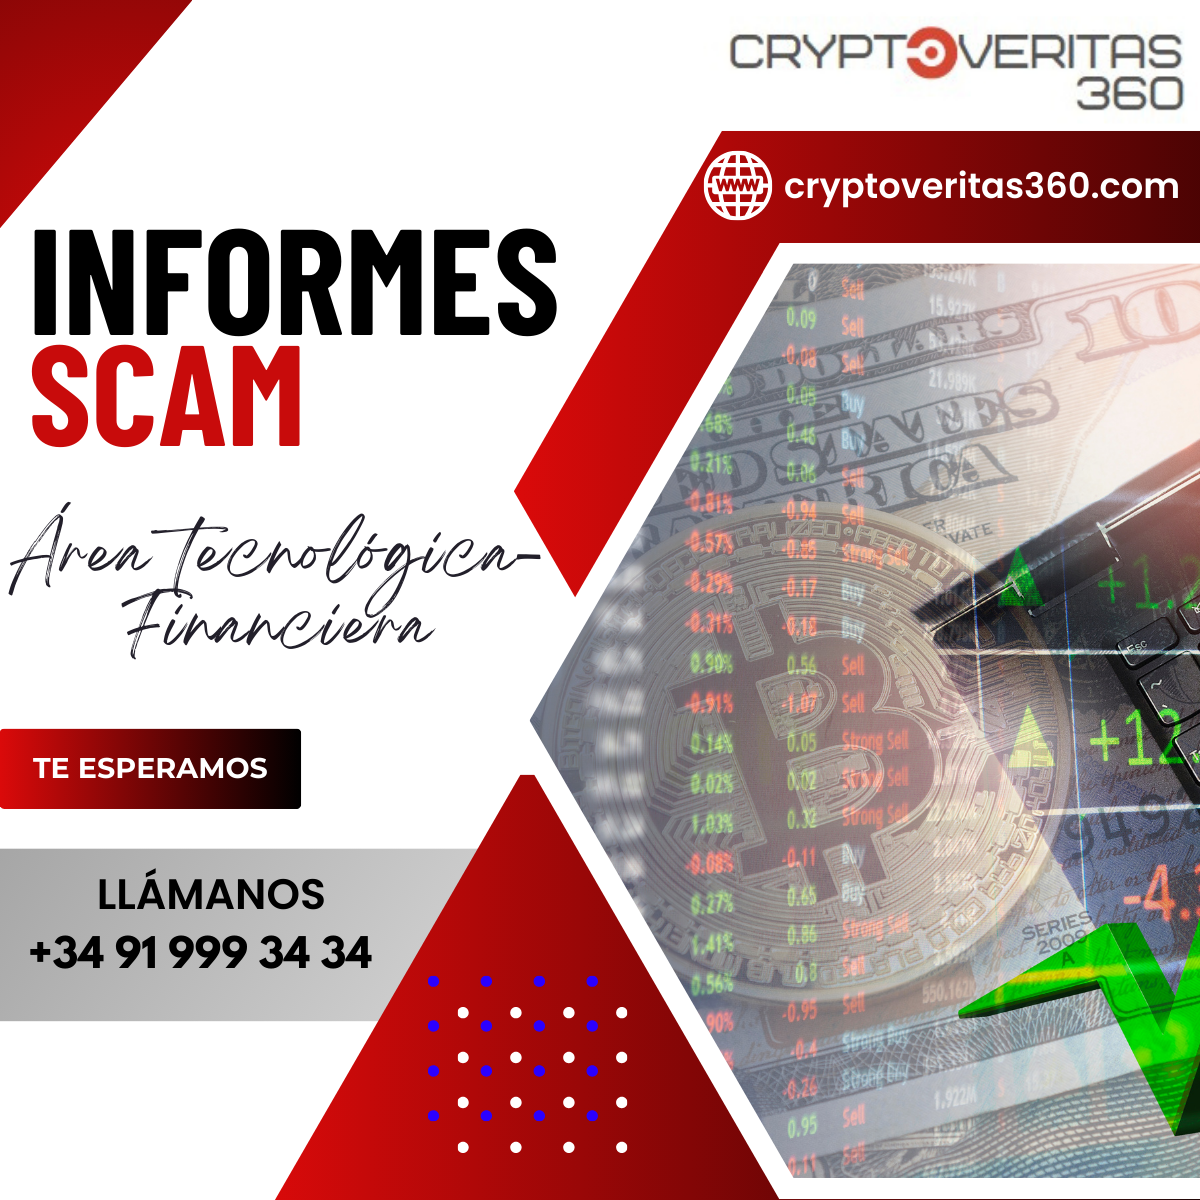 Inform SCAM crypoveritas 360 patner tecnologico (1)